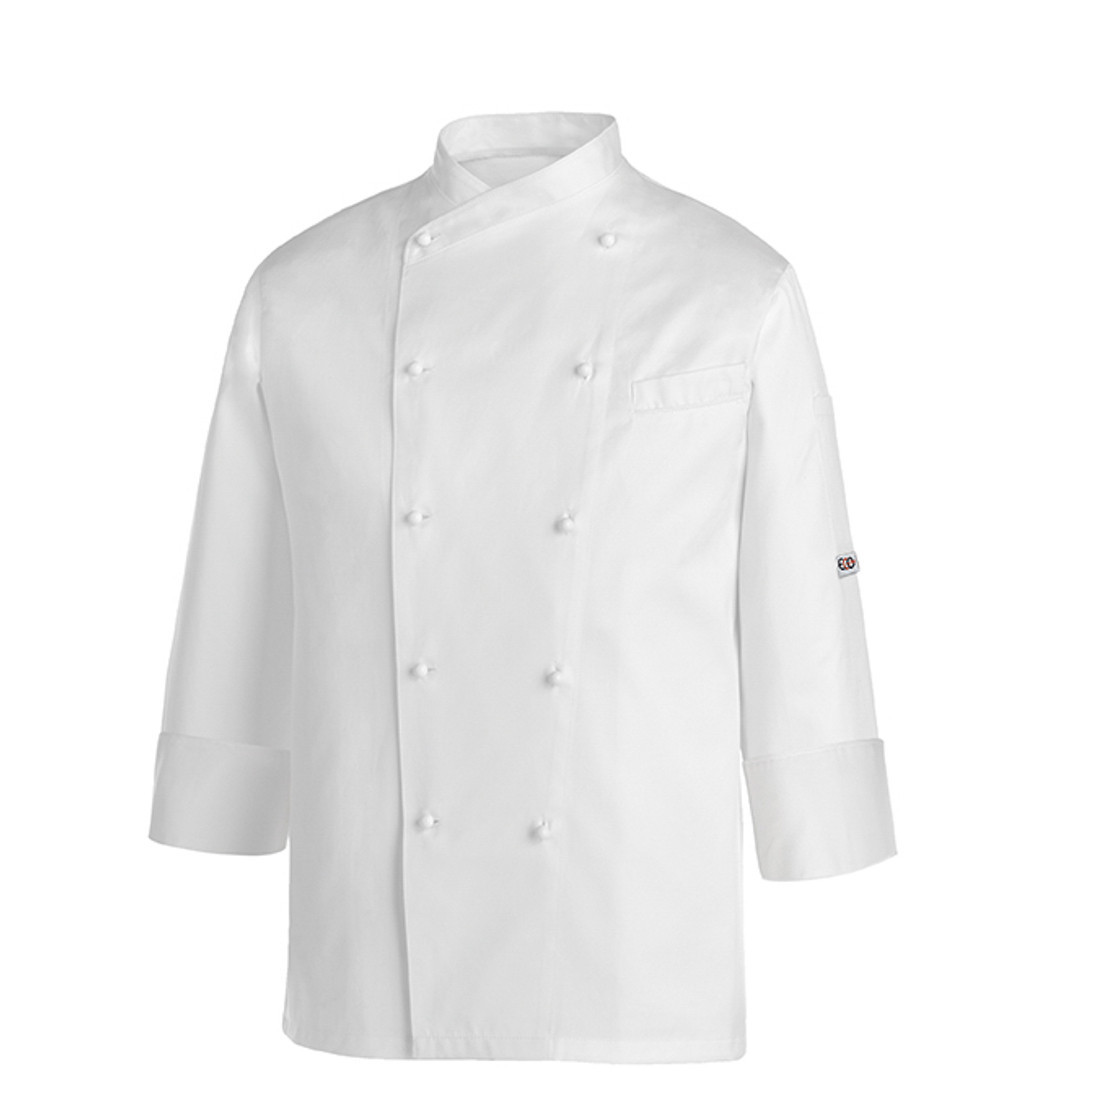 Gerard Piping Chef's Jacket - Safetywear